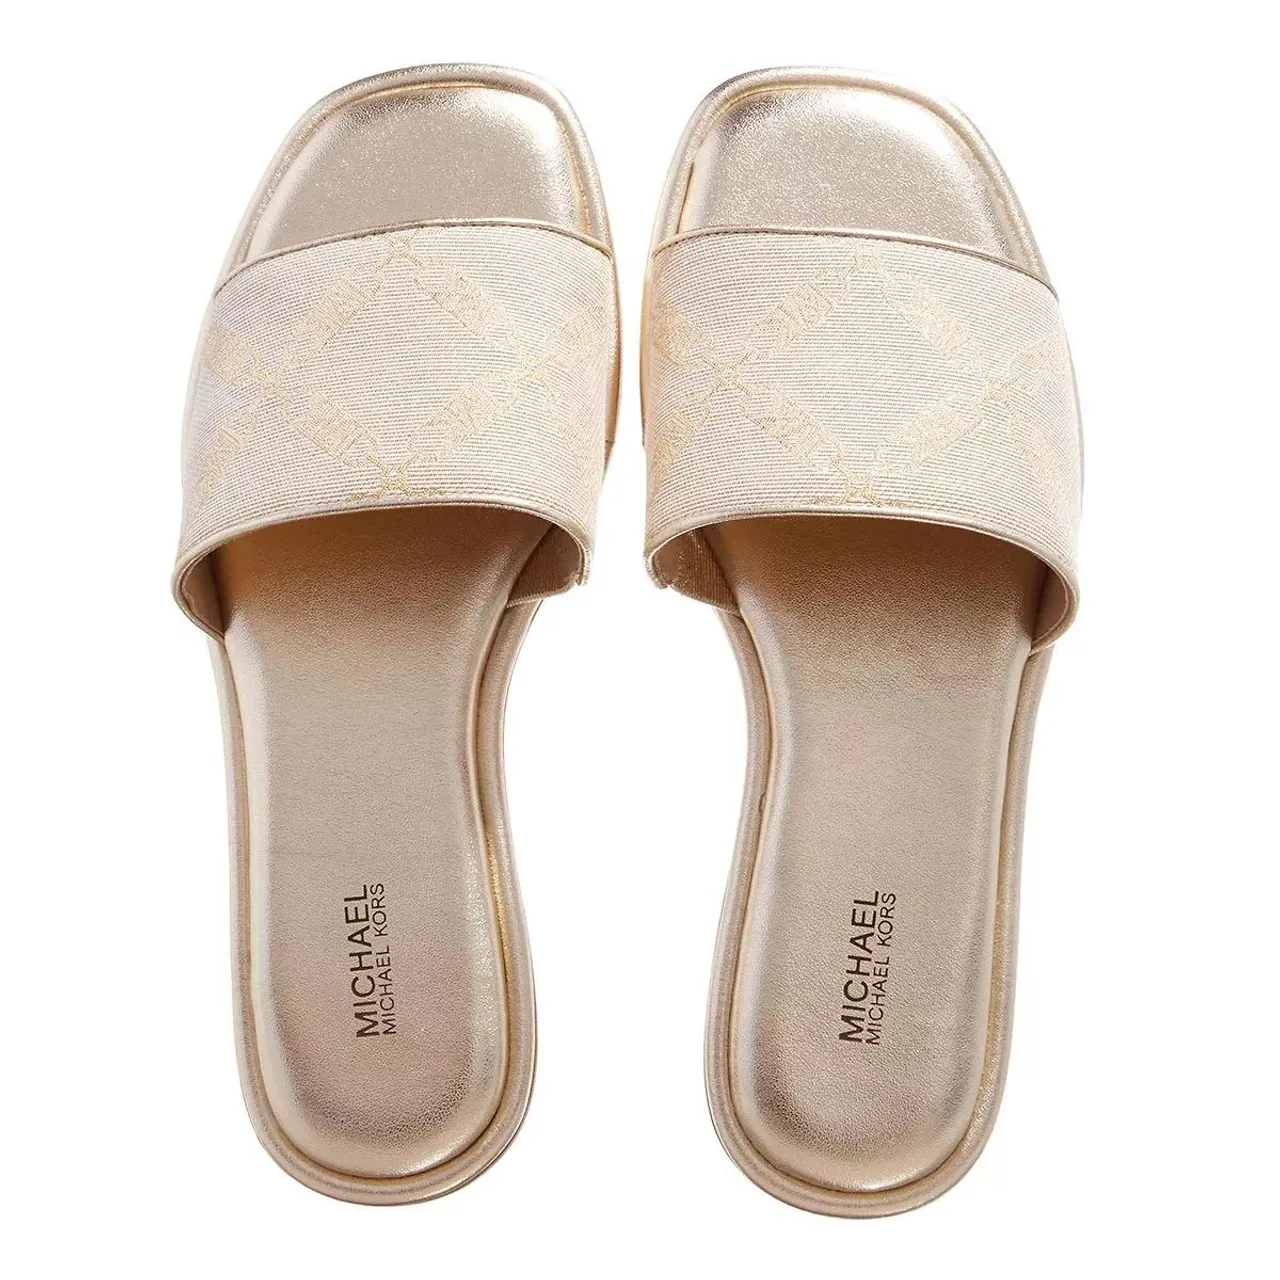 Michael Kors Sandals - Hayworth Slide - beige - Sandals for ladies